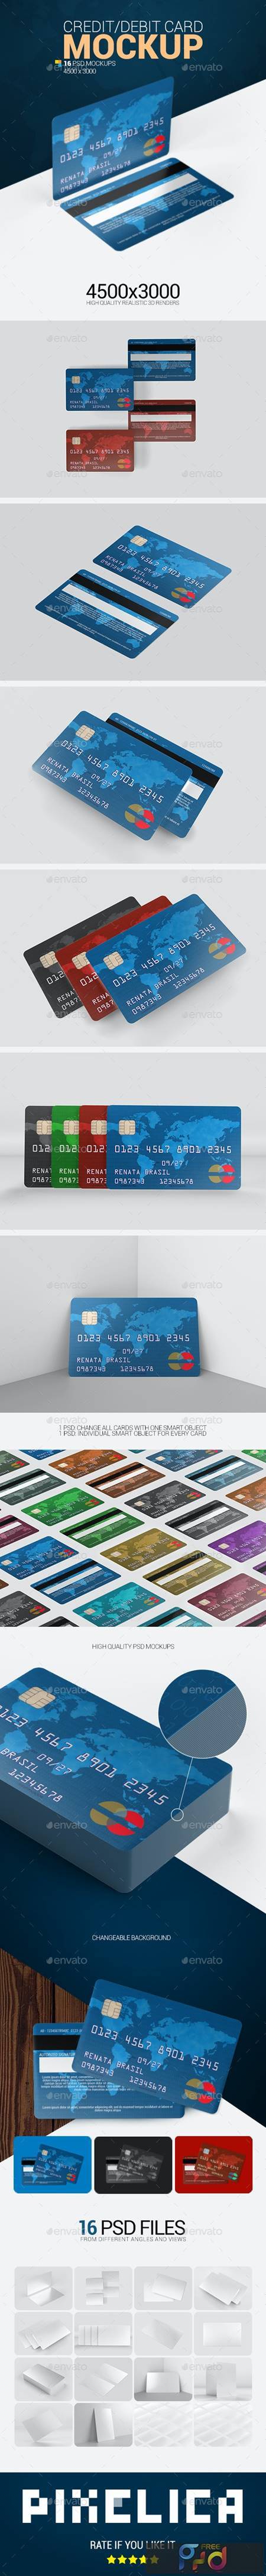 Credit Debit Card Mockup